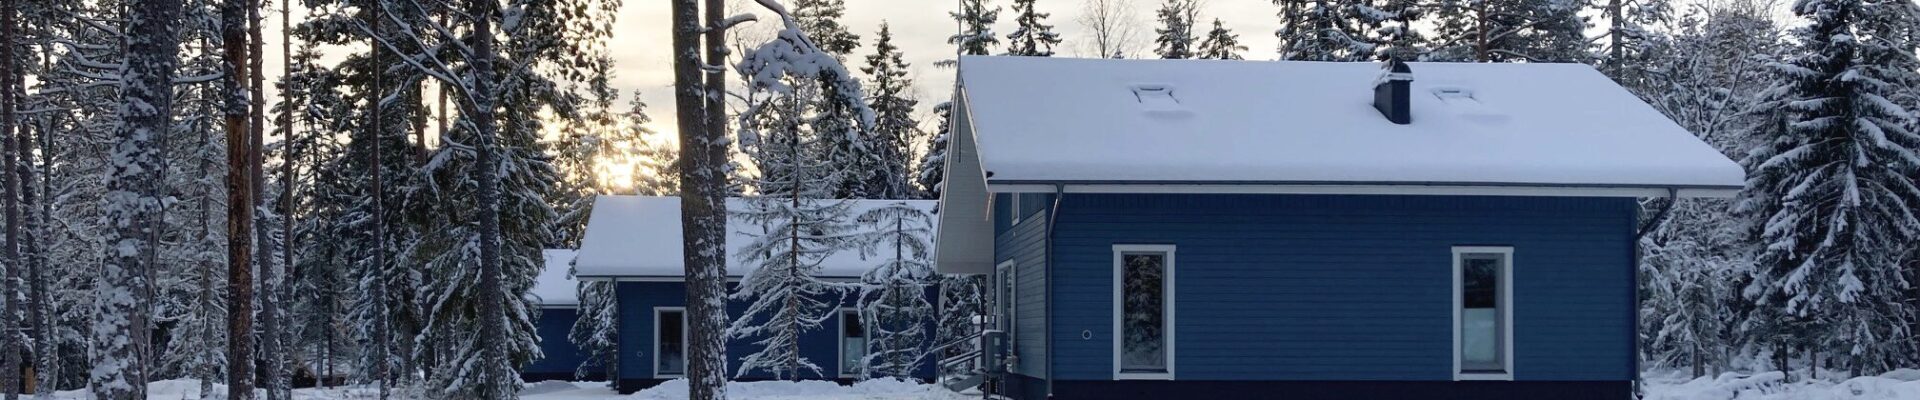 Holiday cottages in Finland_Villas at Merikoivula